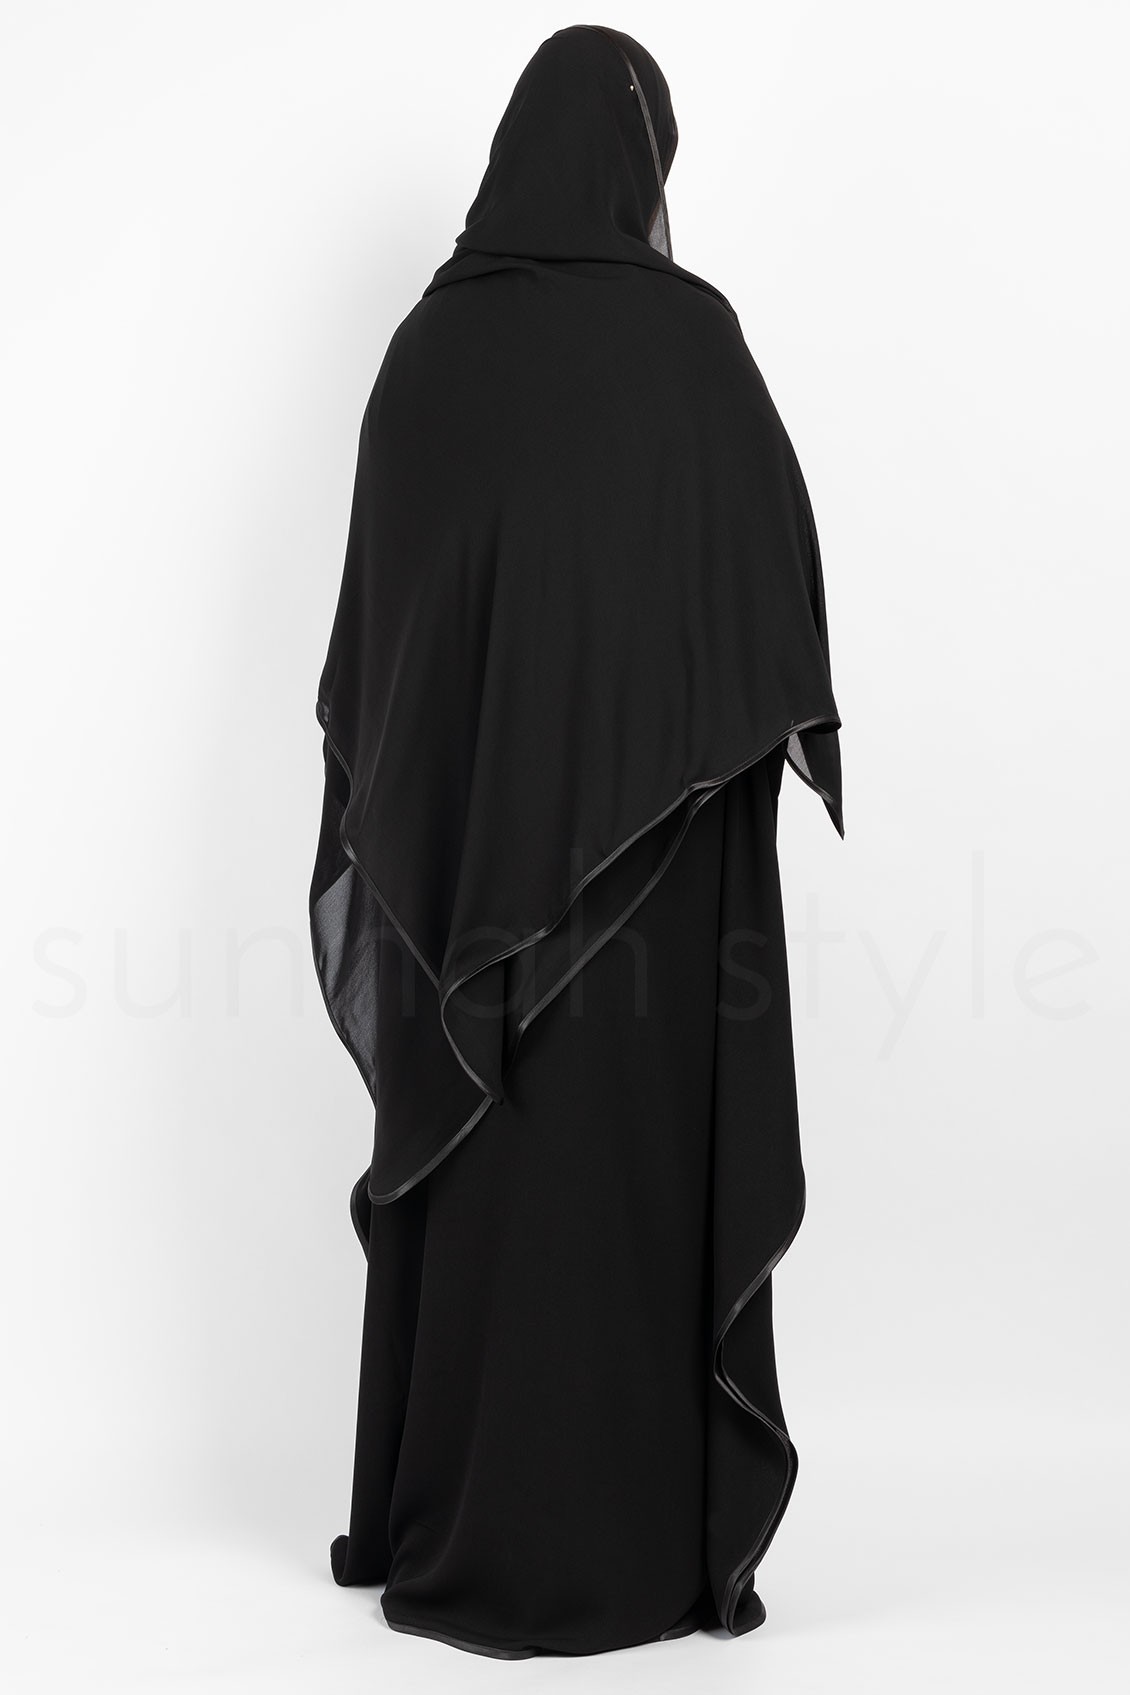 Sunnah Style Satin Trimmed Shayla XL Black